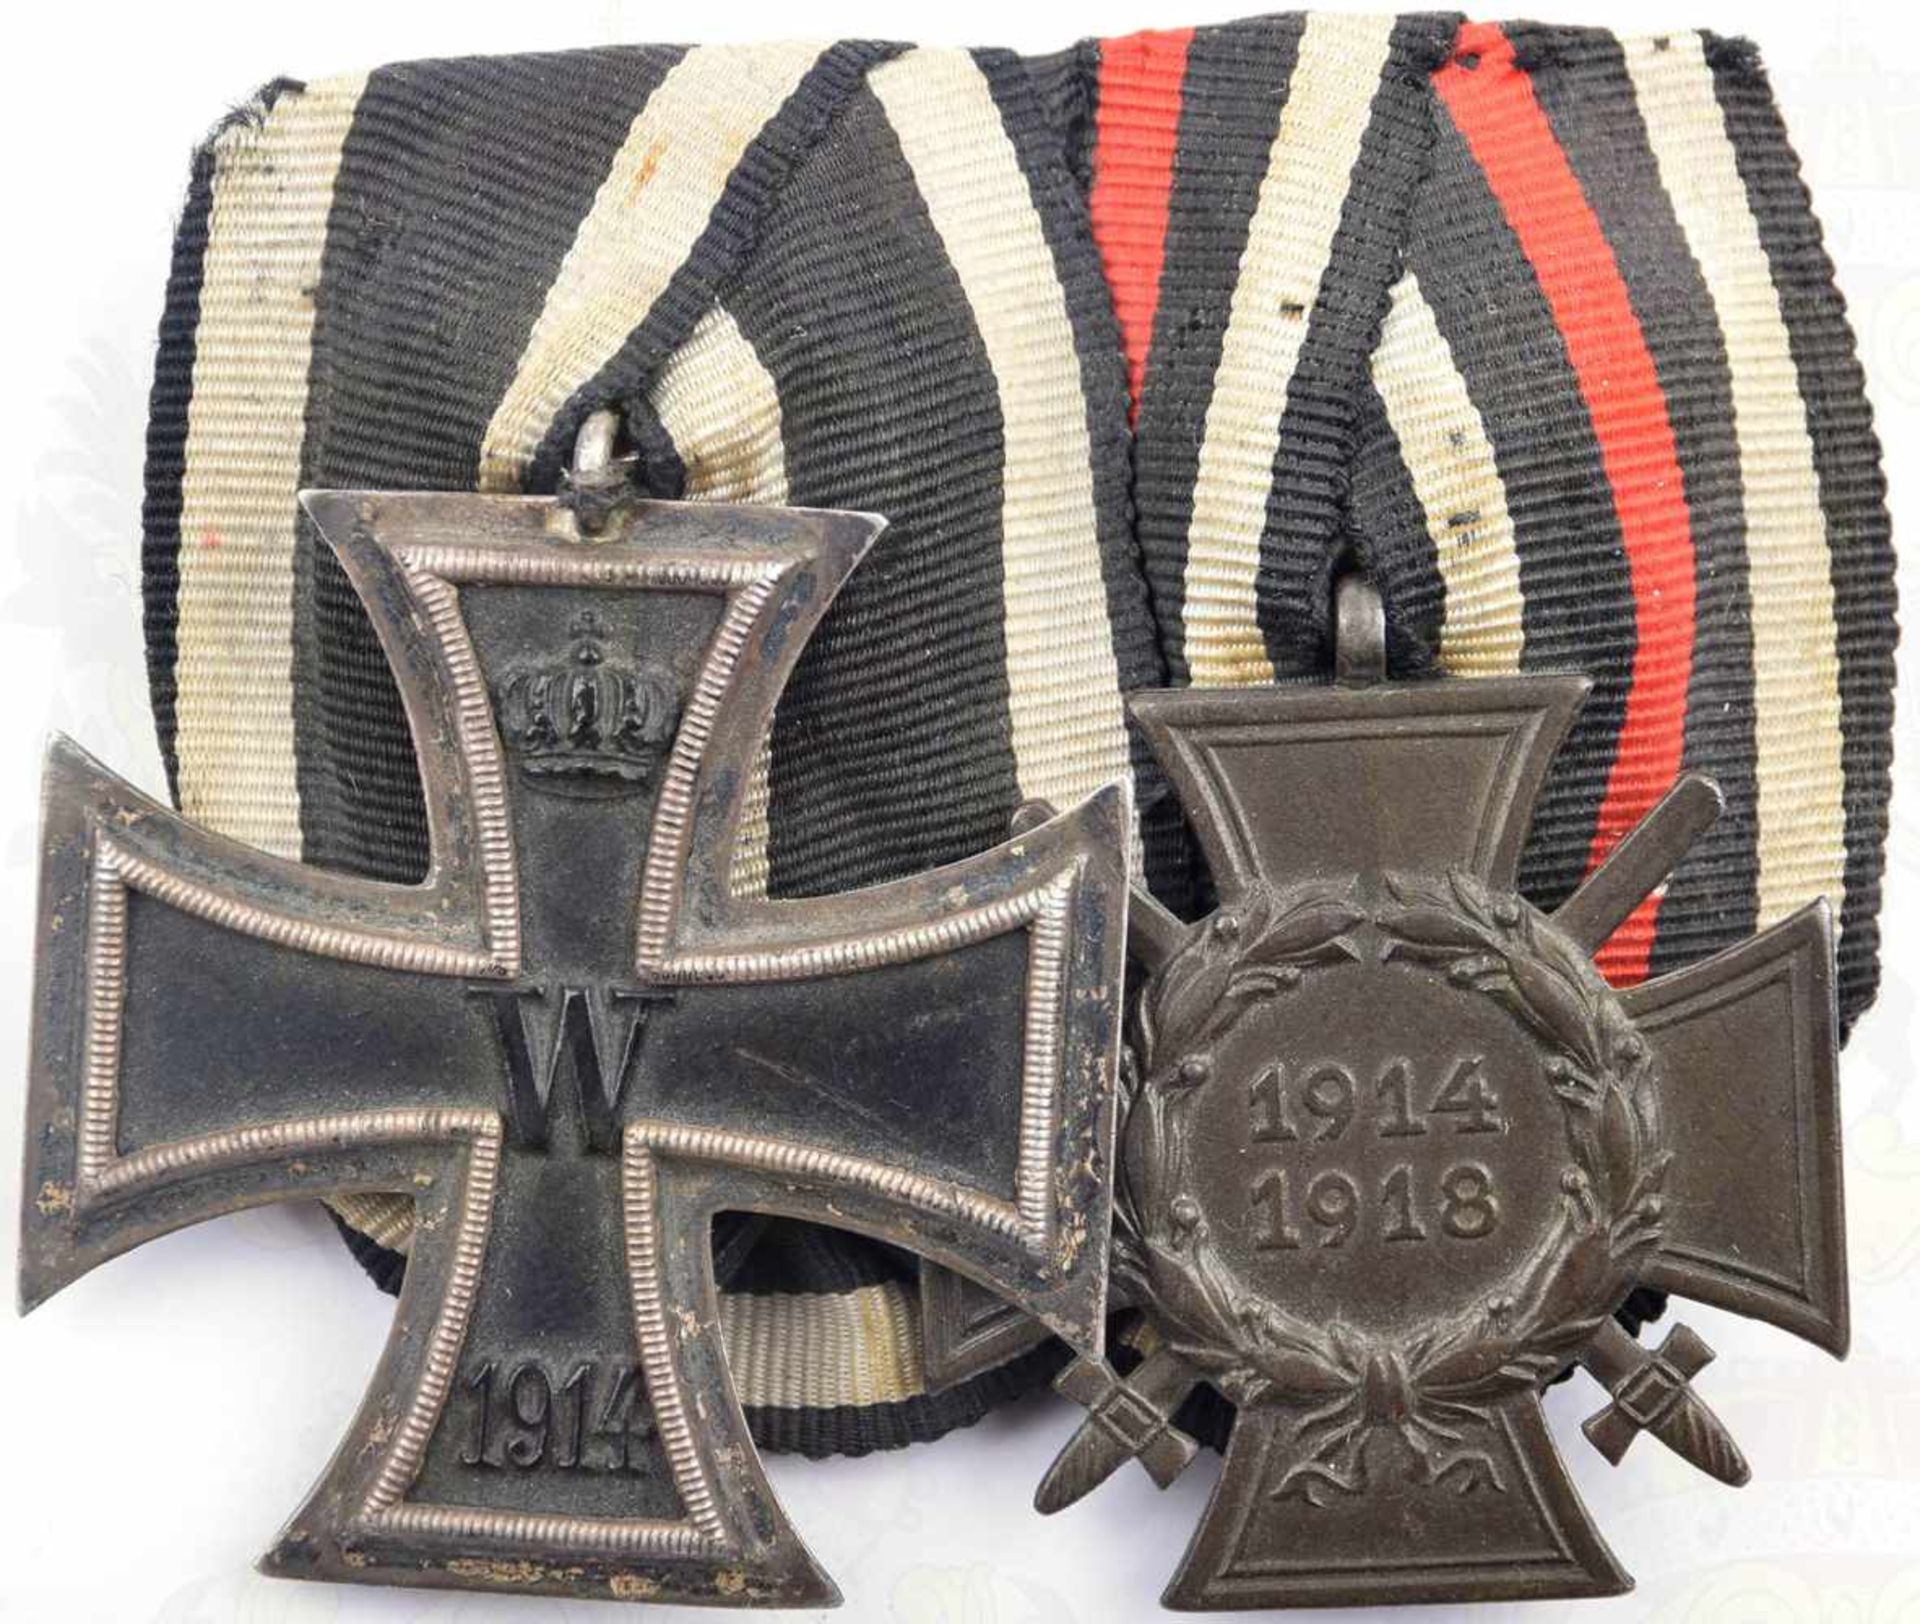 GROSSE ORDENSPANGE: EK II 1914, matt lackierter Eisenkern, Zarge gedunkelt; Frontkämpfer-Ehrenkreuz,